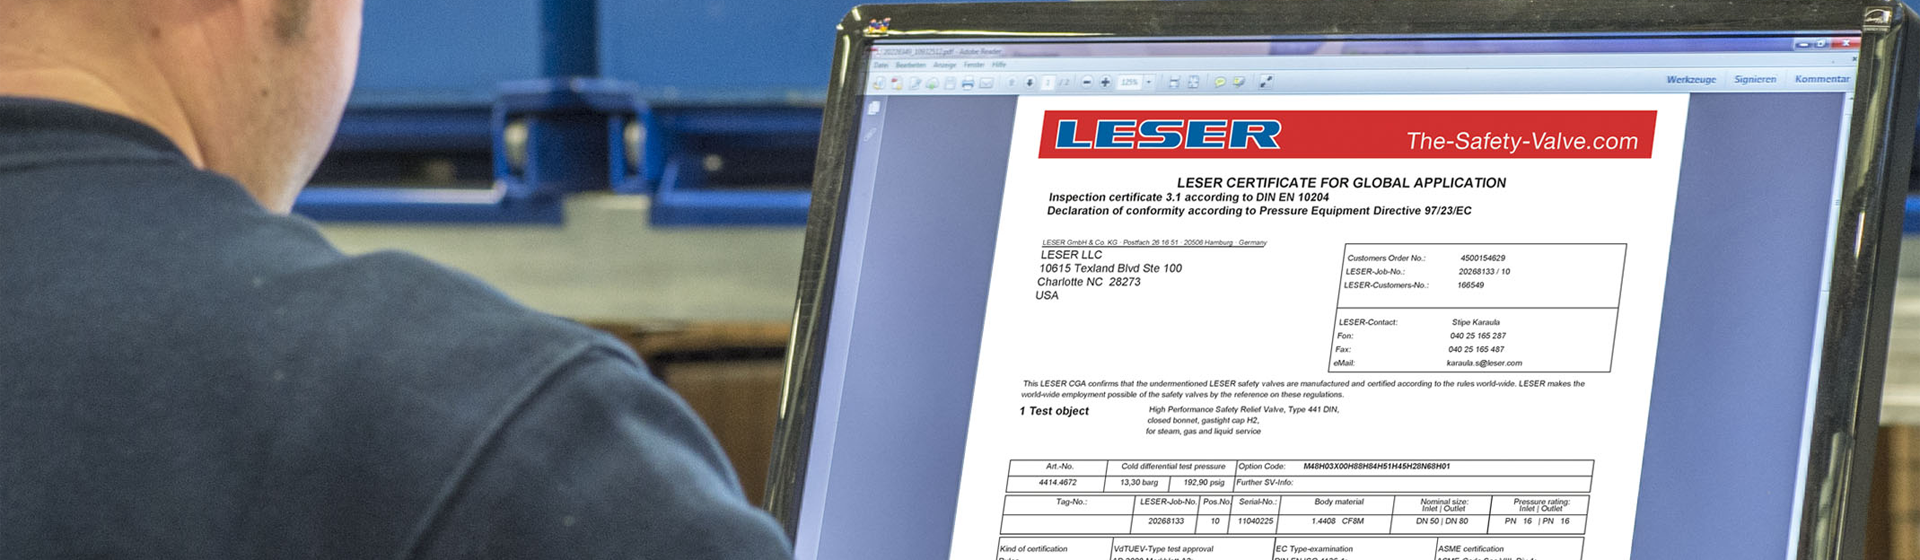 Certificates for safety valves from LESER